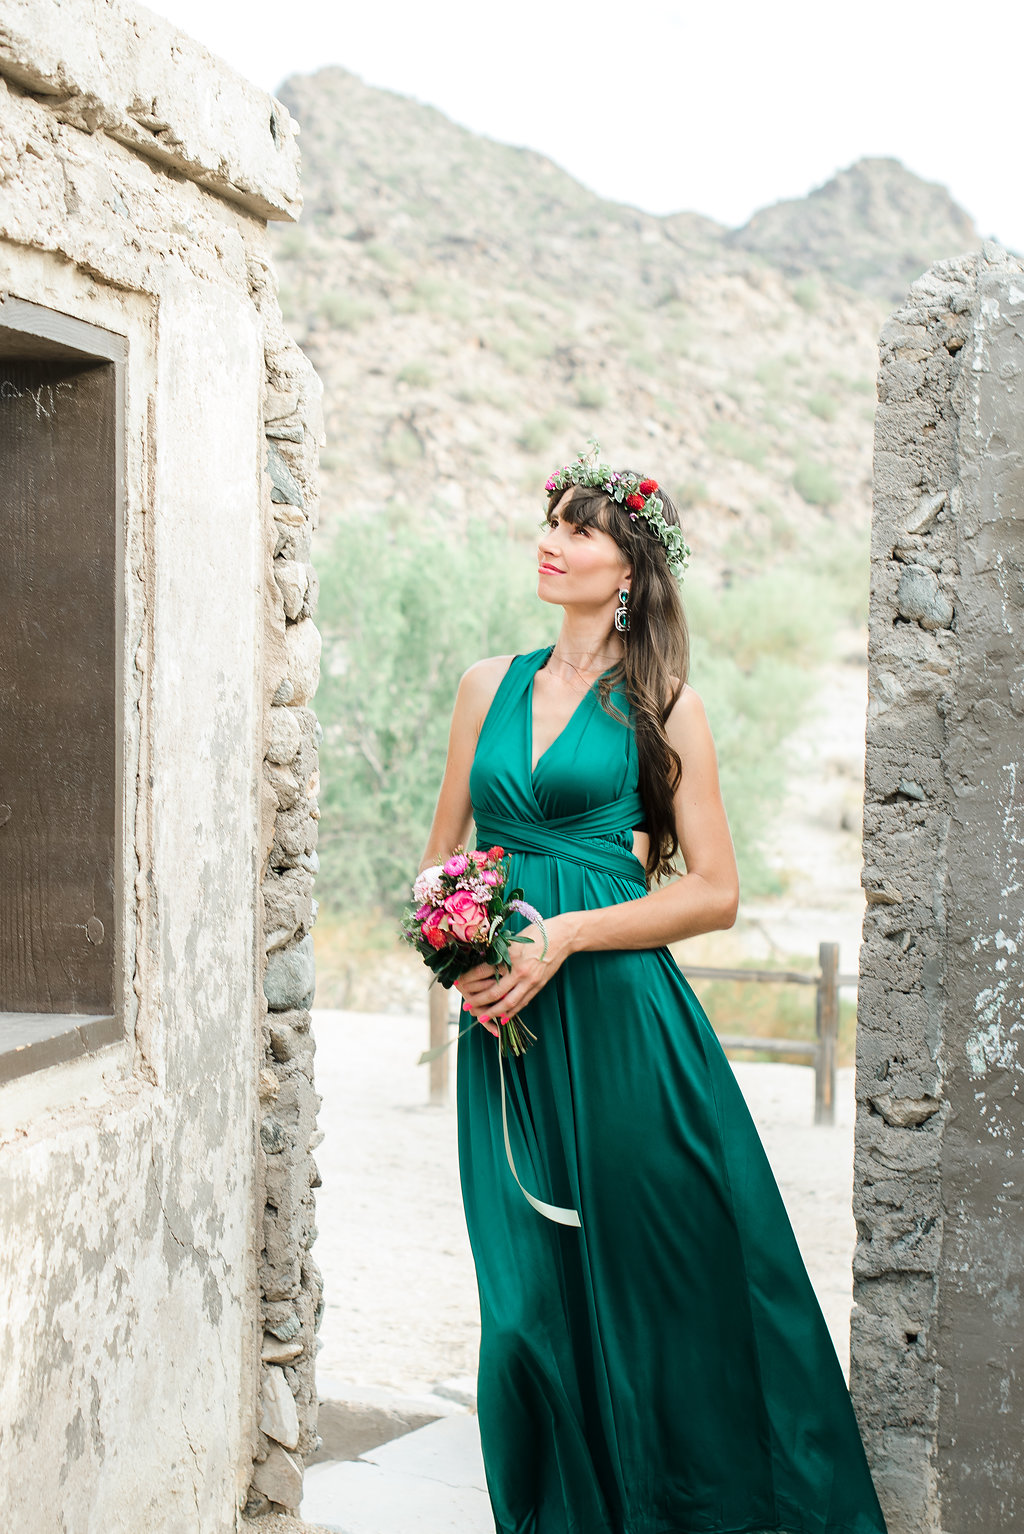 Emerald Wedding Ideas - An Elegant and Modern Styled Elopement in Phoenix, Arizona